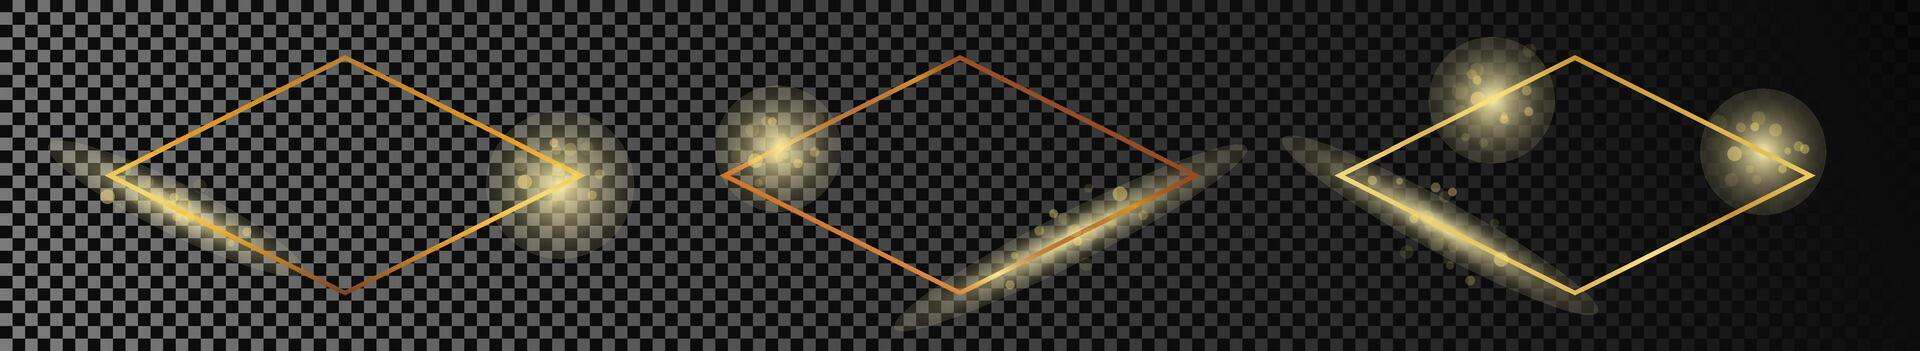 Gold glowing rhombus shape frame vector